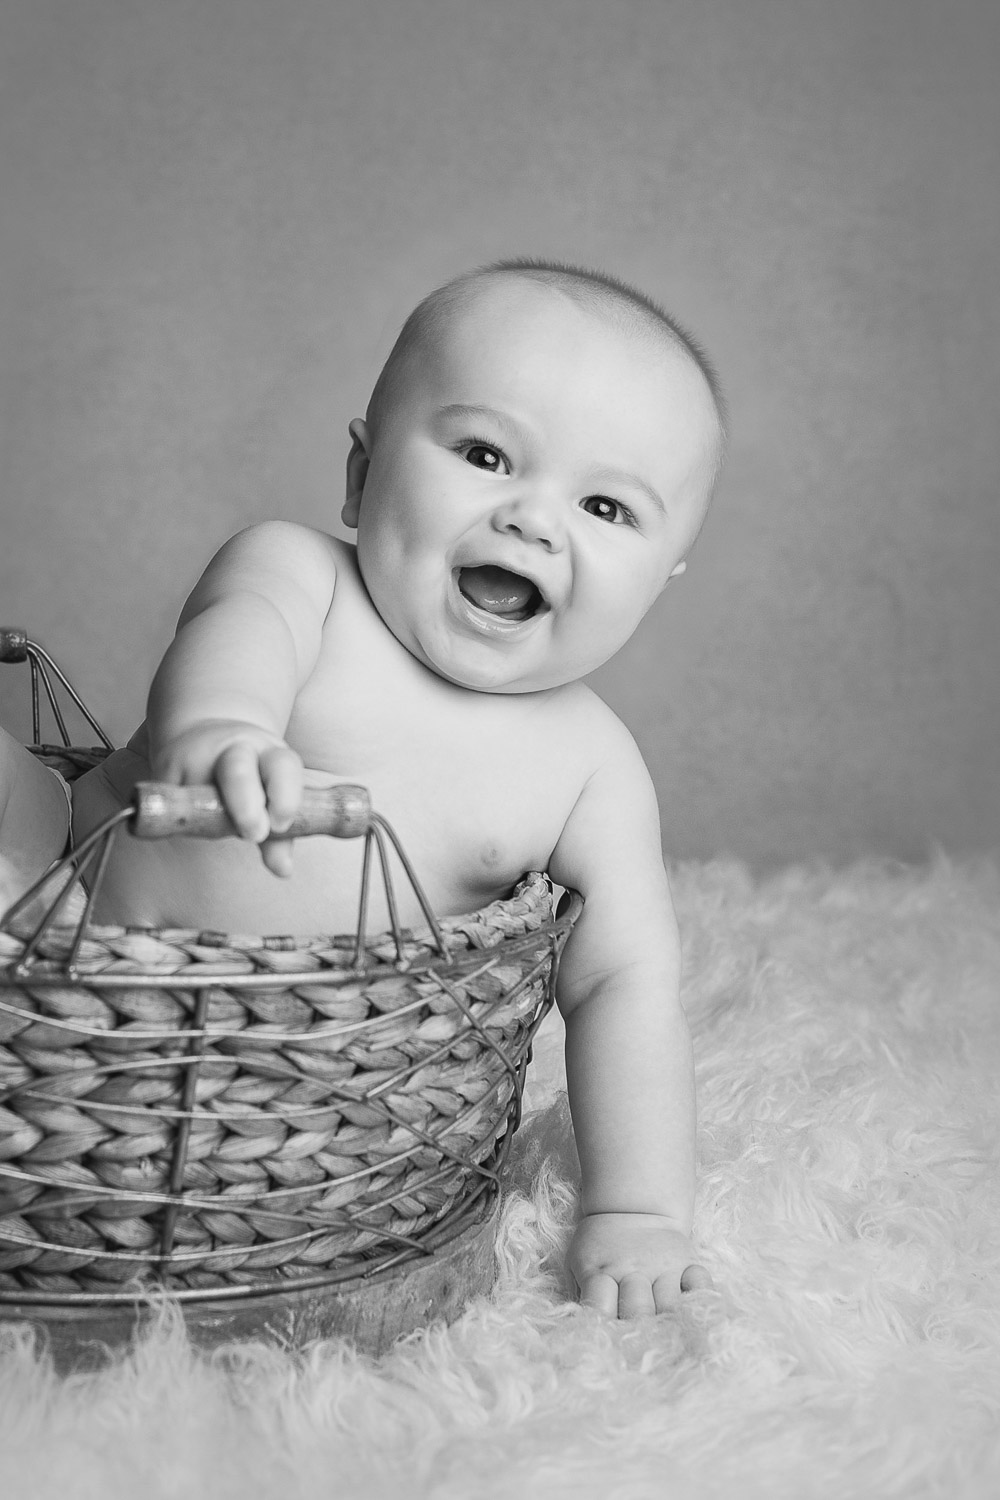 baby in basket smiling